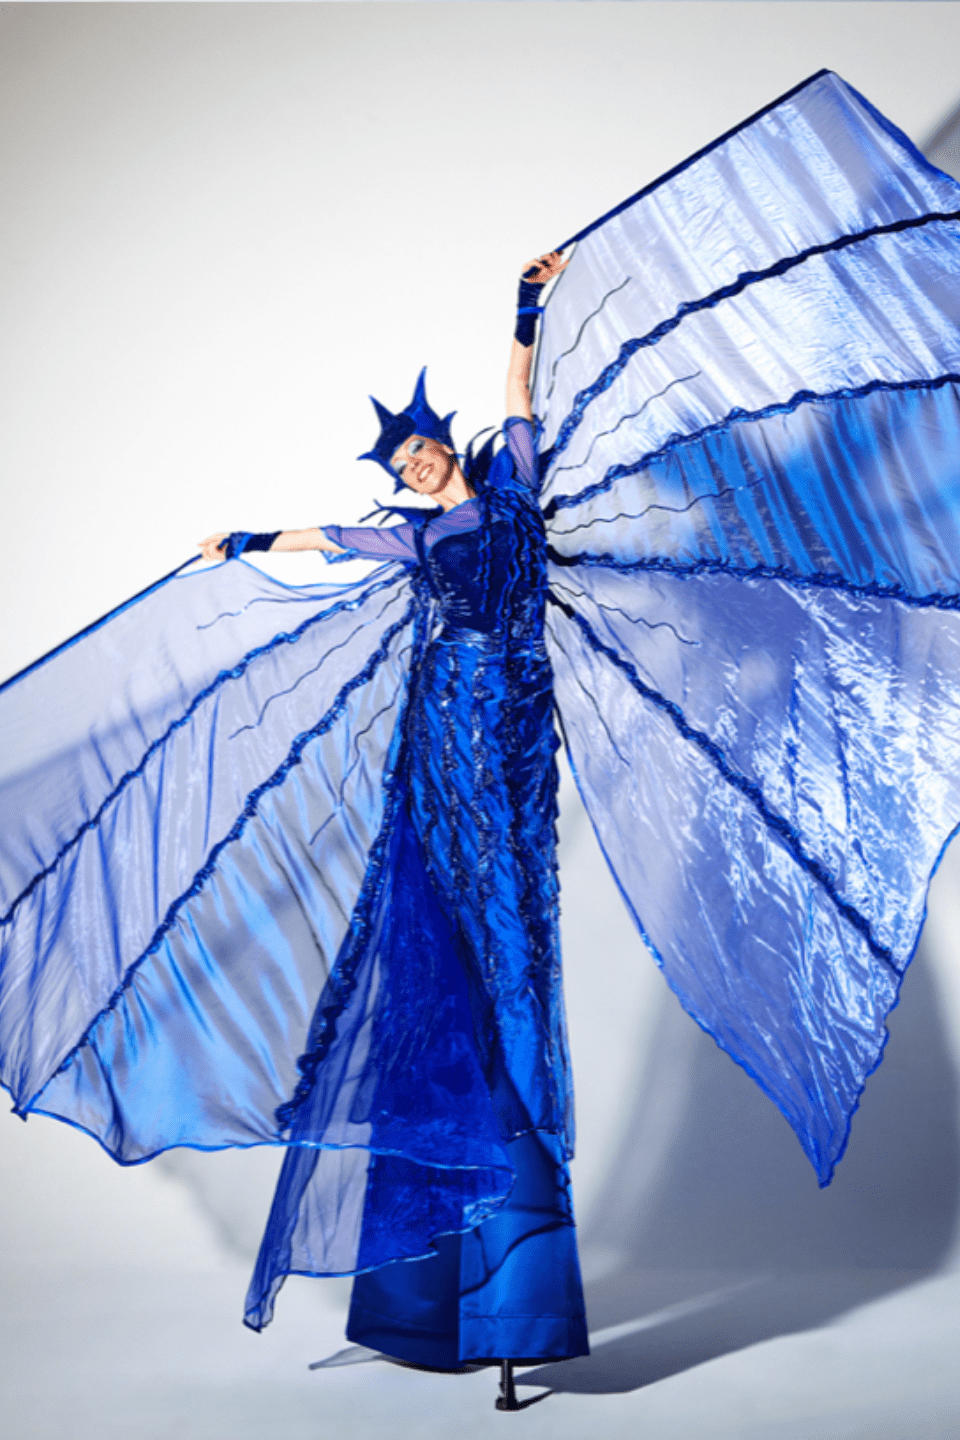 act vrouw in blauwe jurk met blauwe vleugels